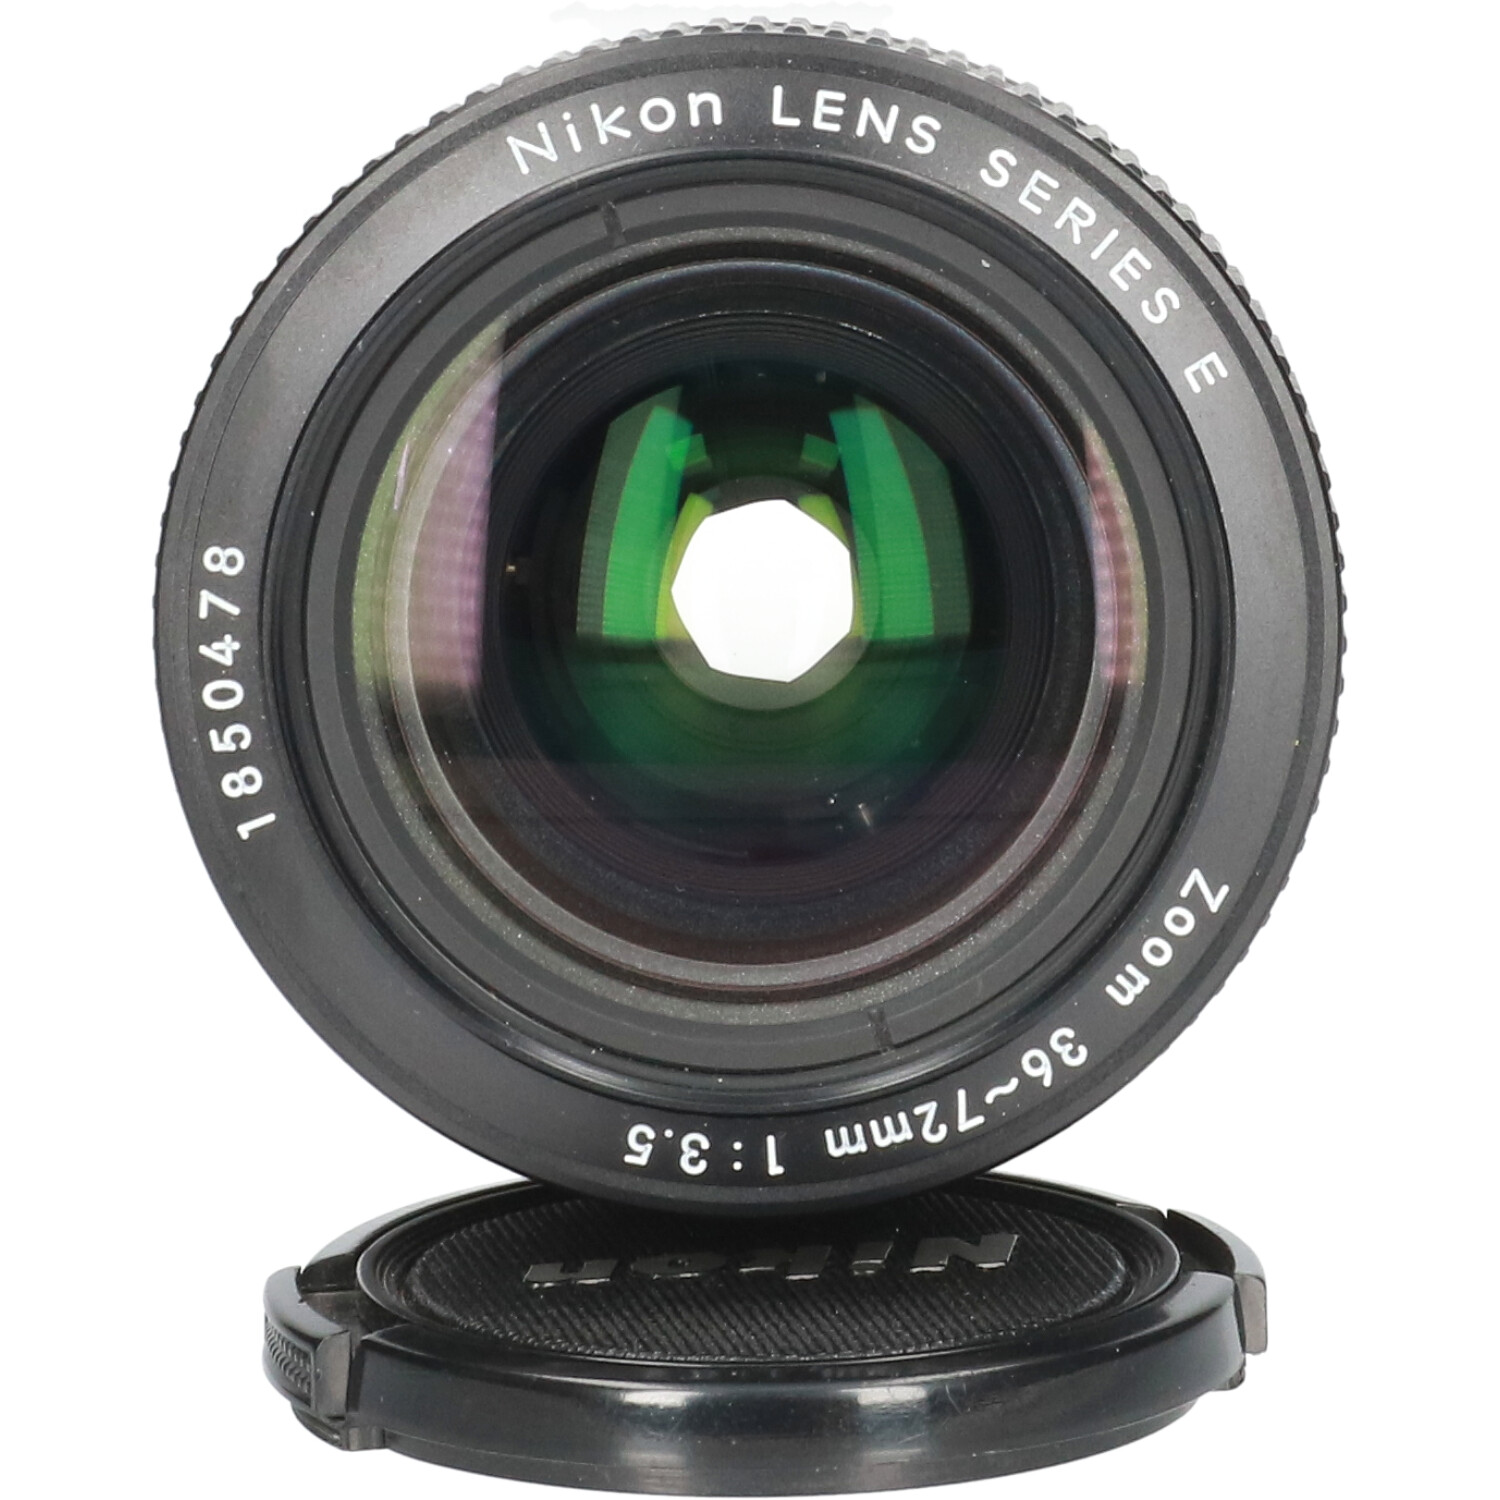 Nikon Lens SERIES E Zoom 36-72mm 1:3.5